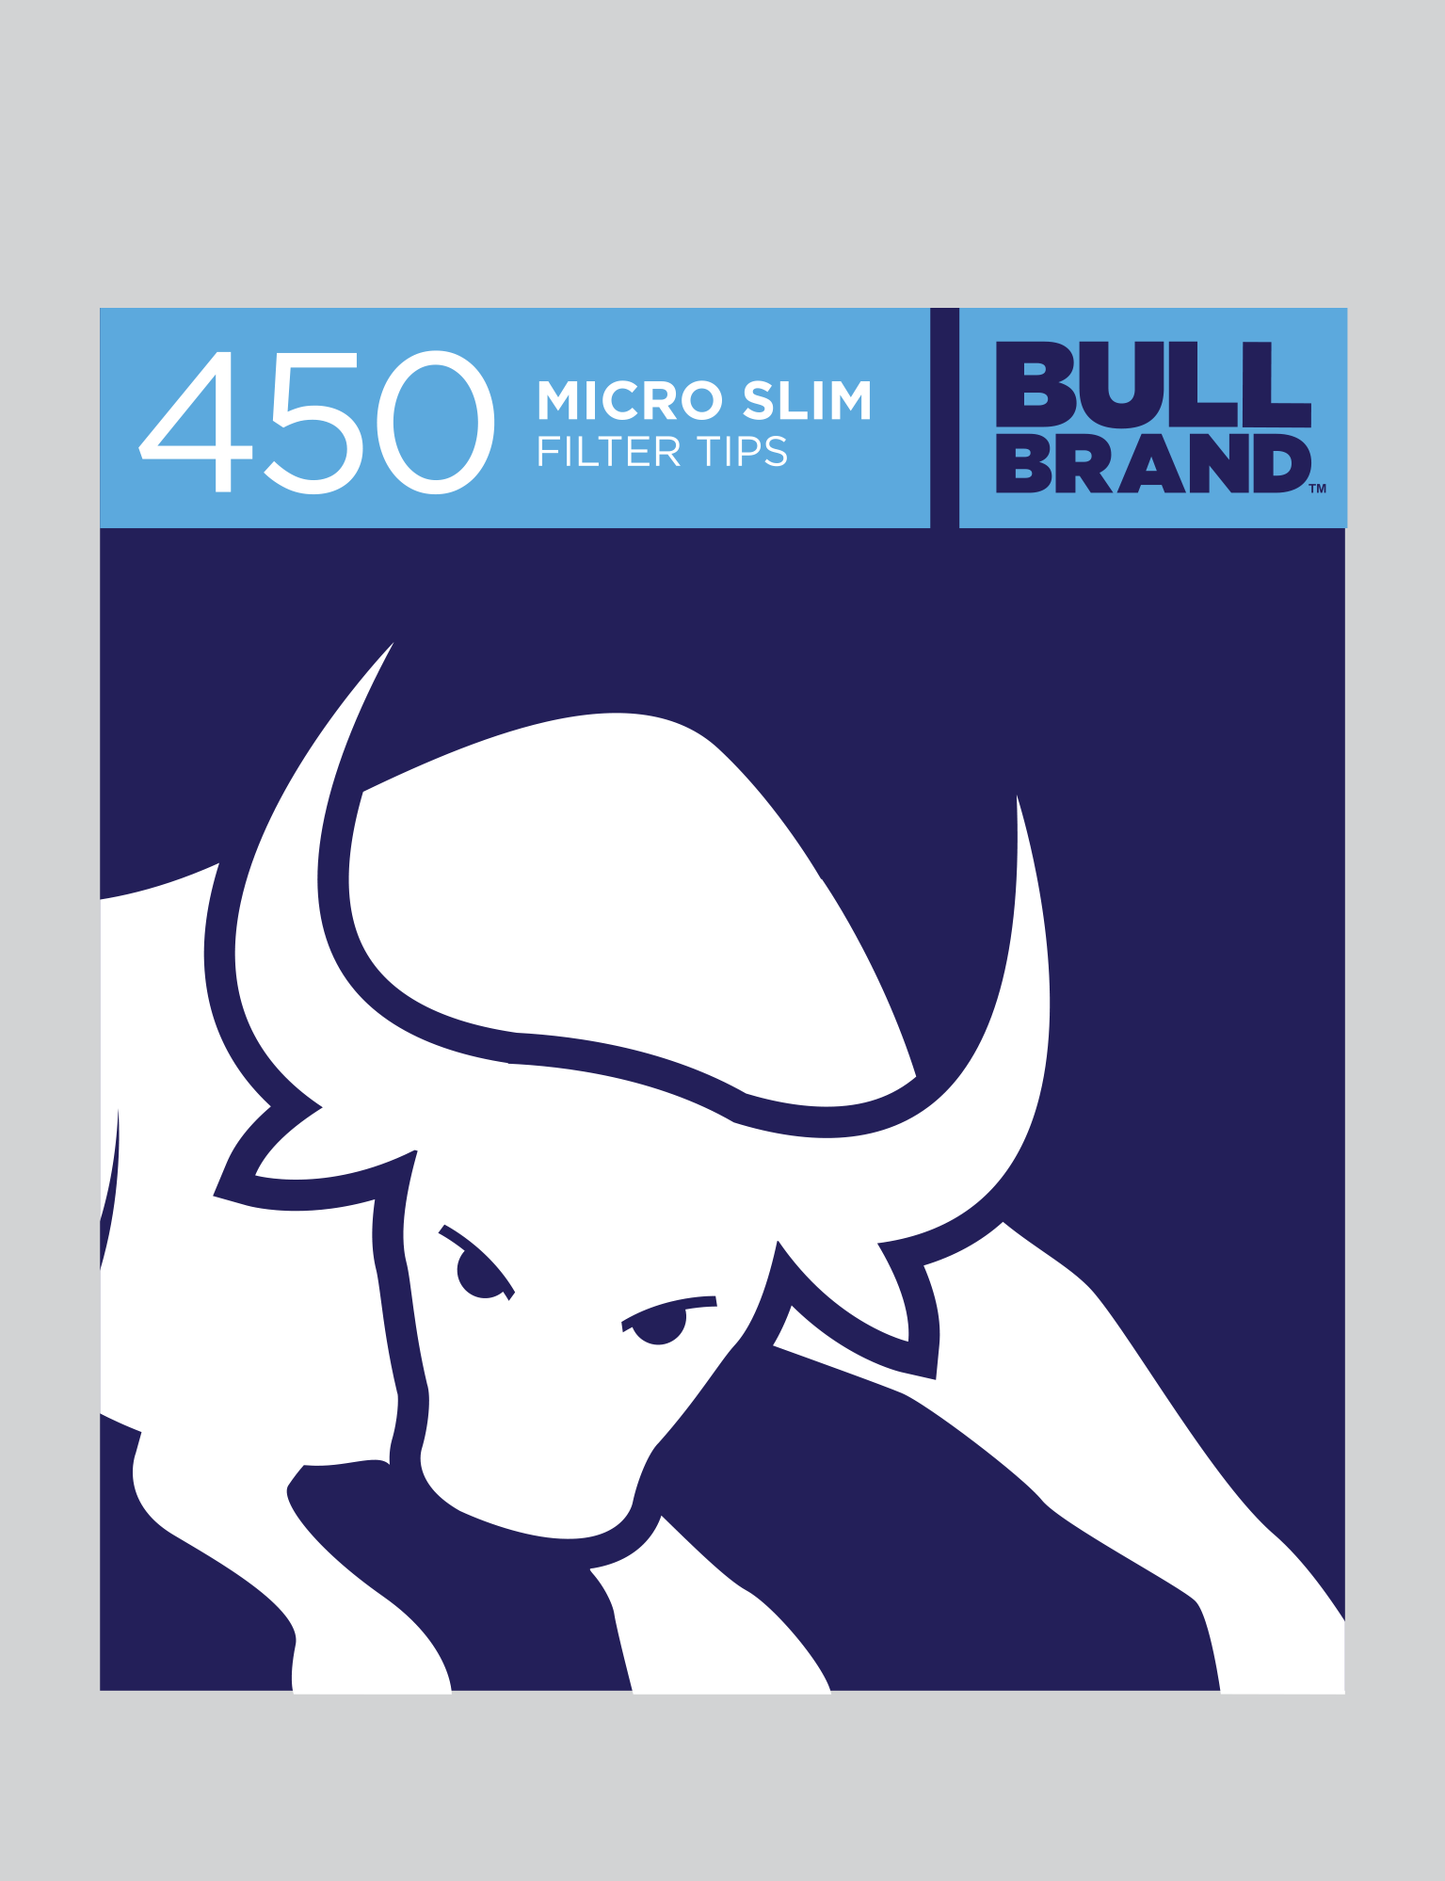 Bull Brand Micro Filter Tips Bags 450s